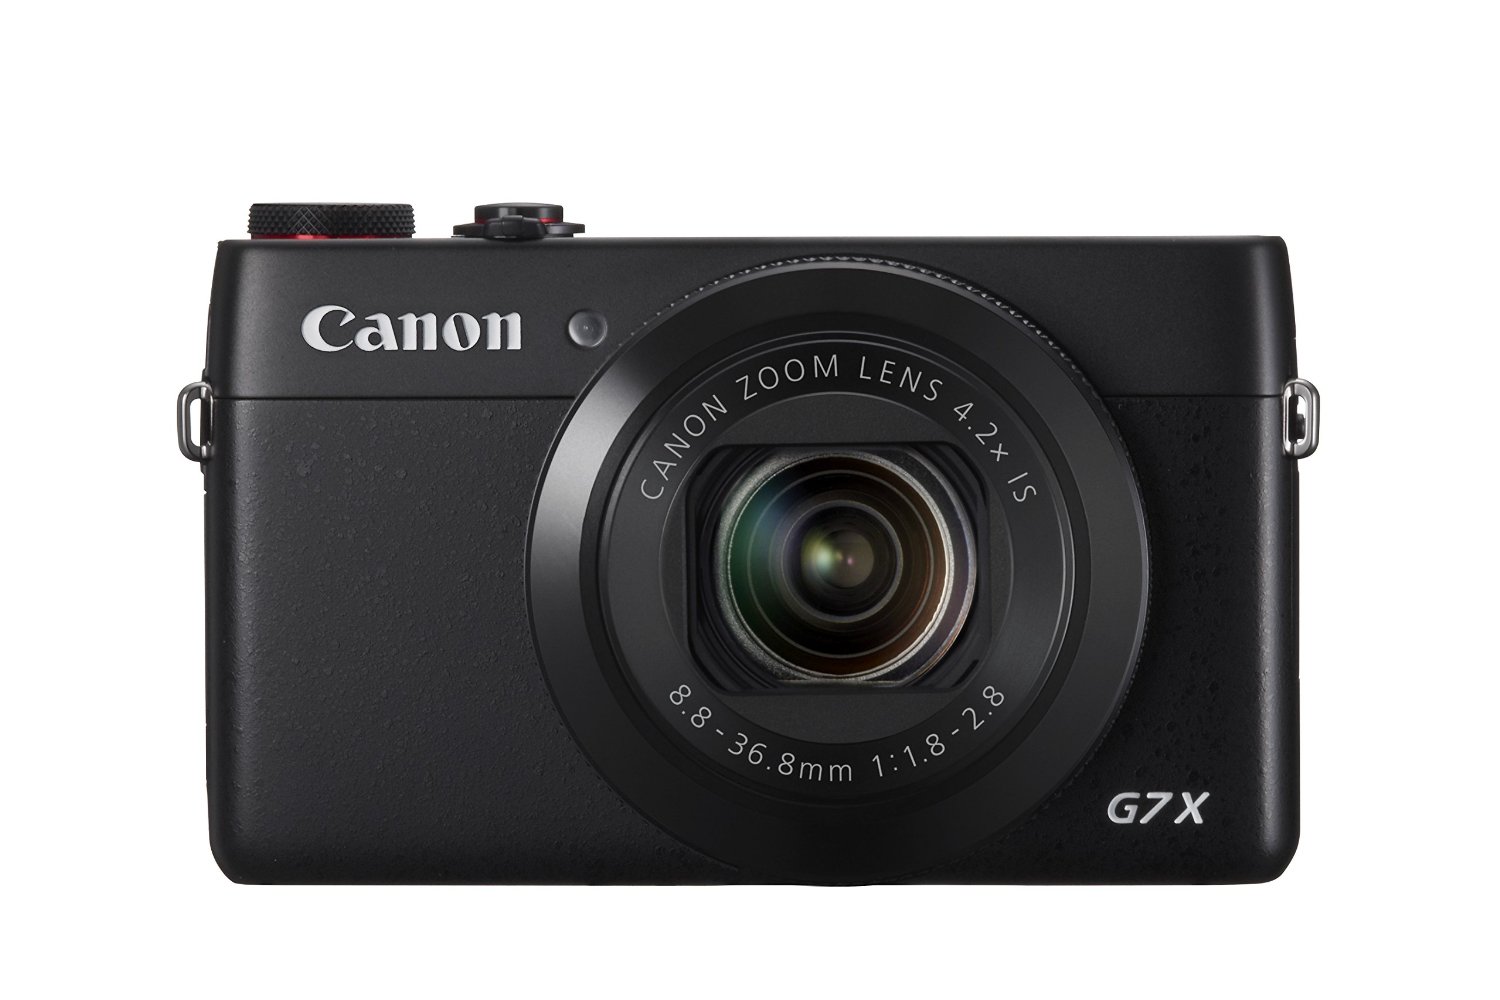 Canon PowerShot G7 X camera